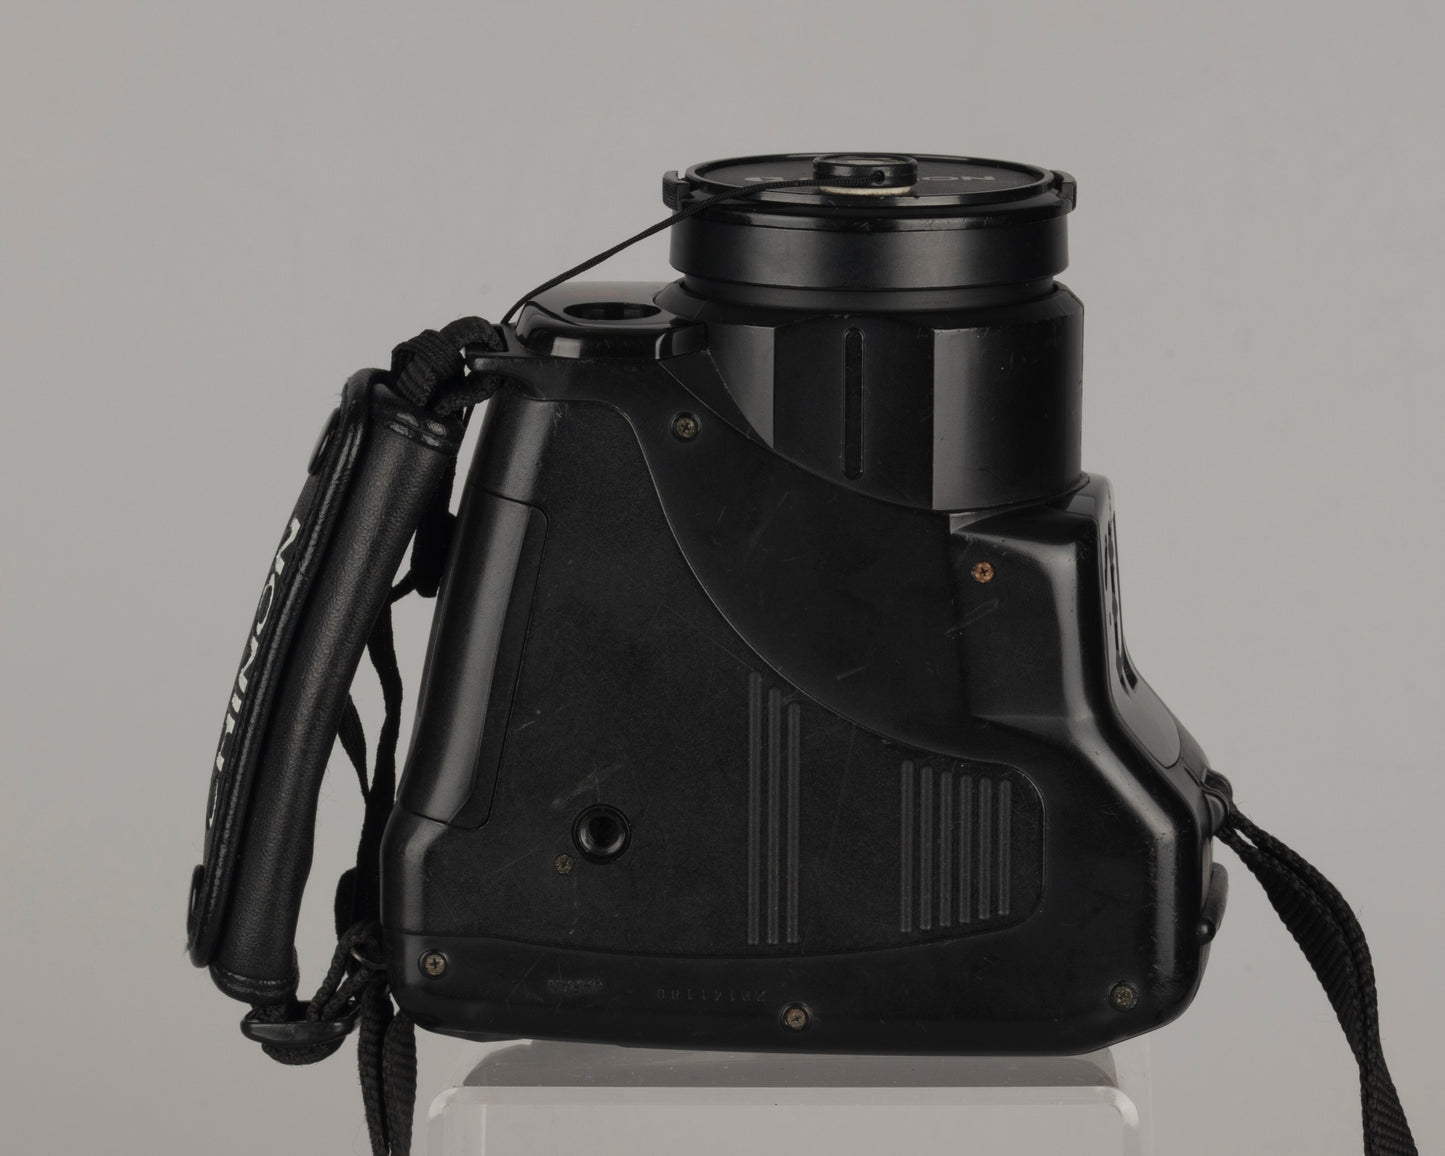 Reflex à film 35 mm Chinon Genesis III 'bridge' avec objectif 38-110 mm